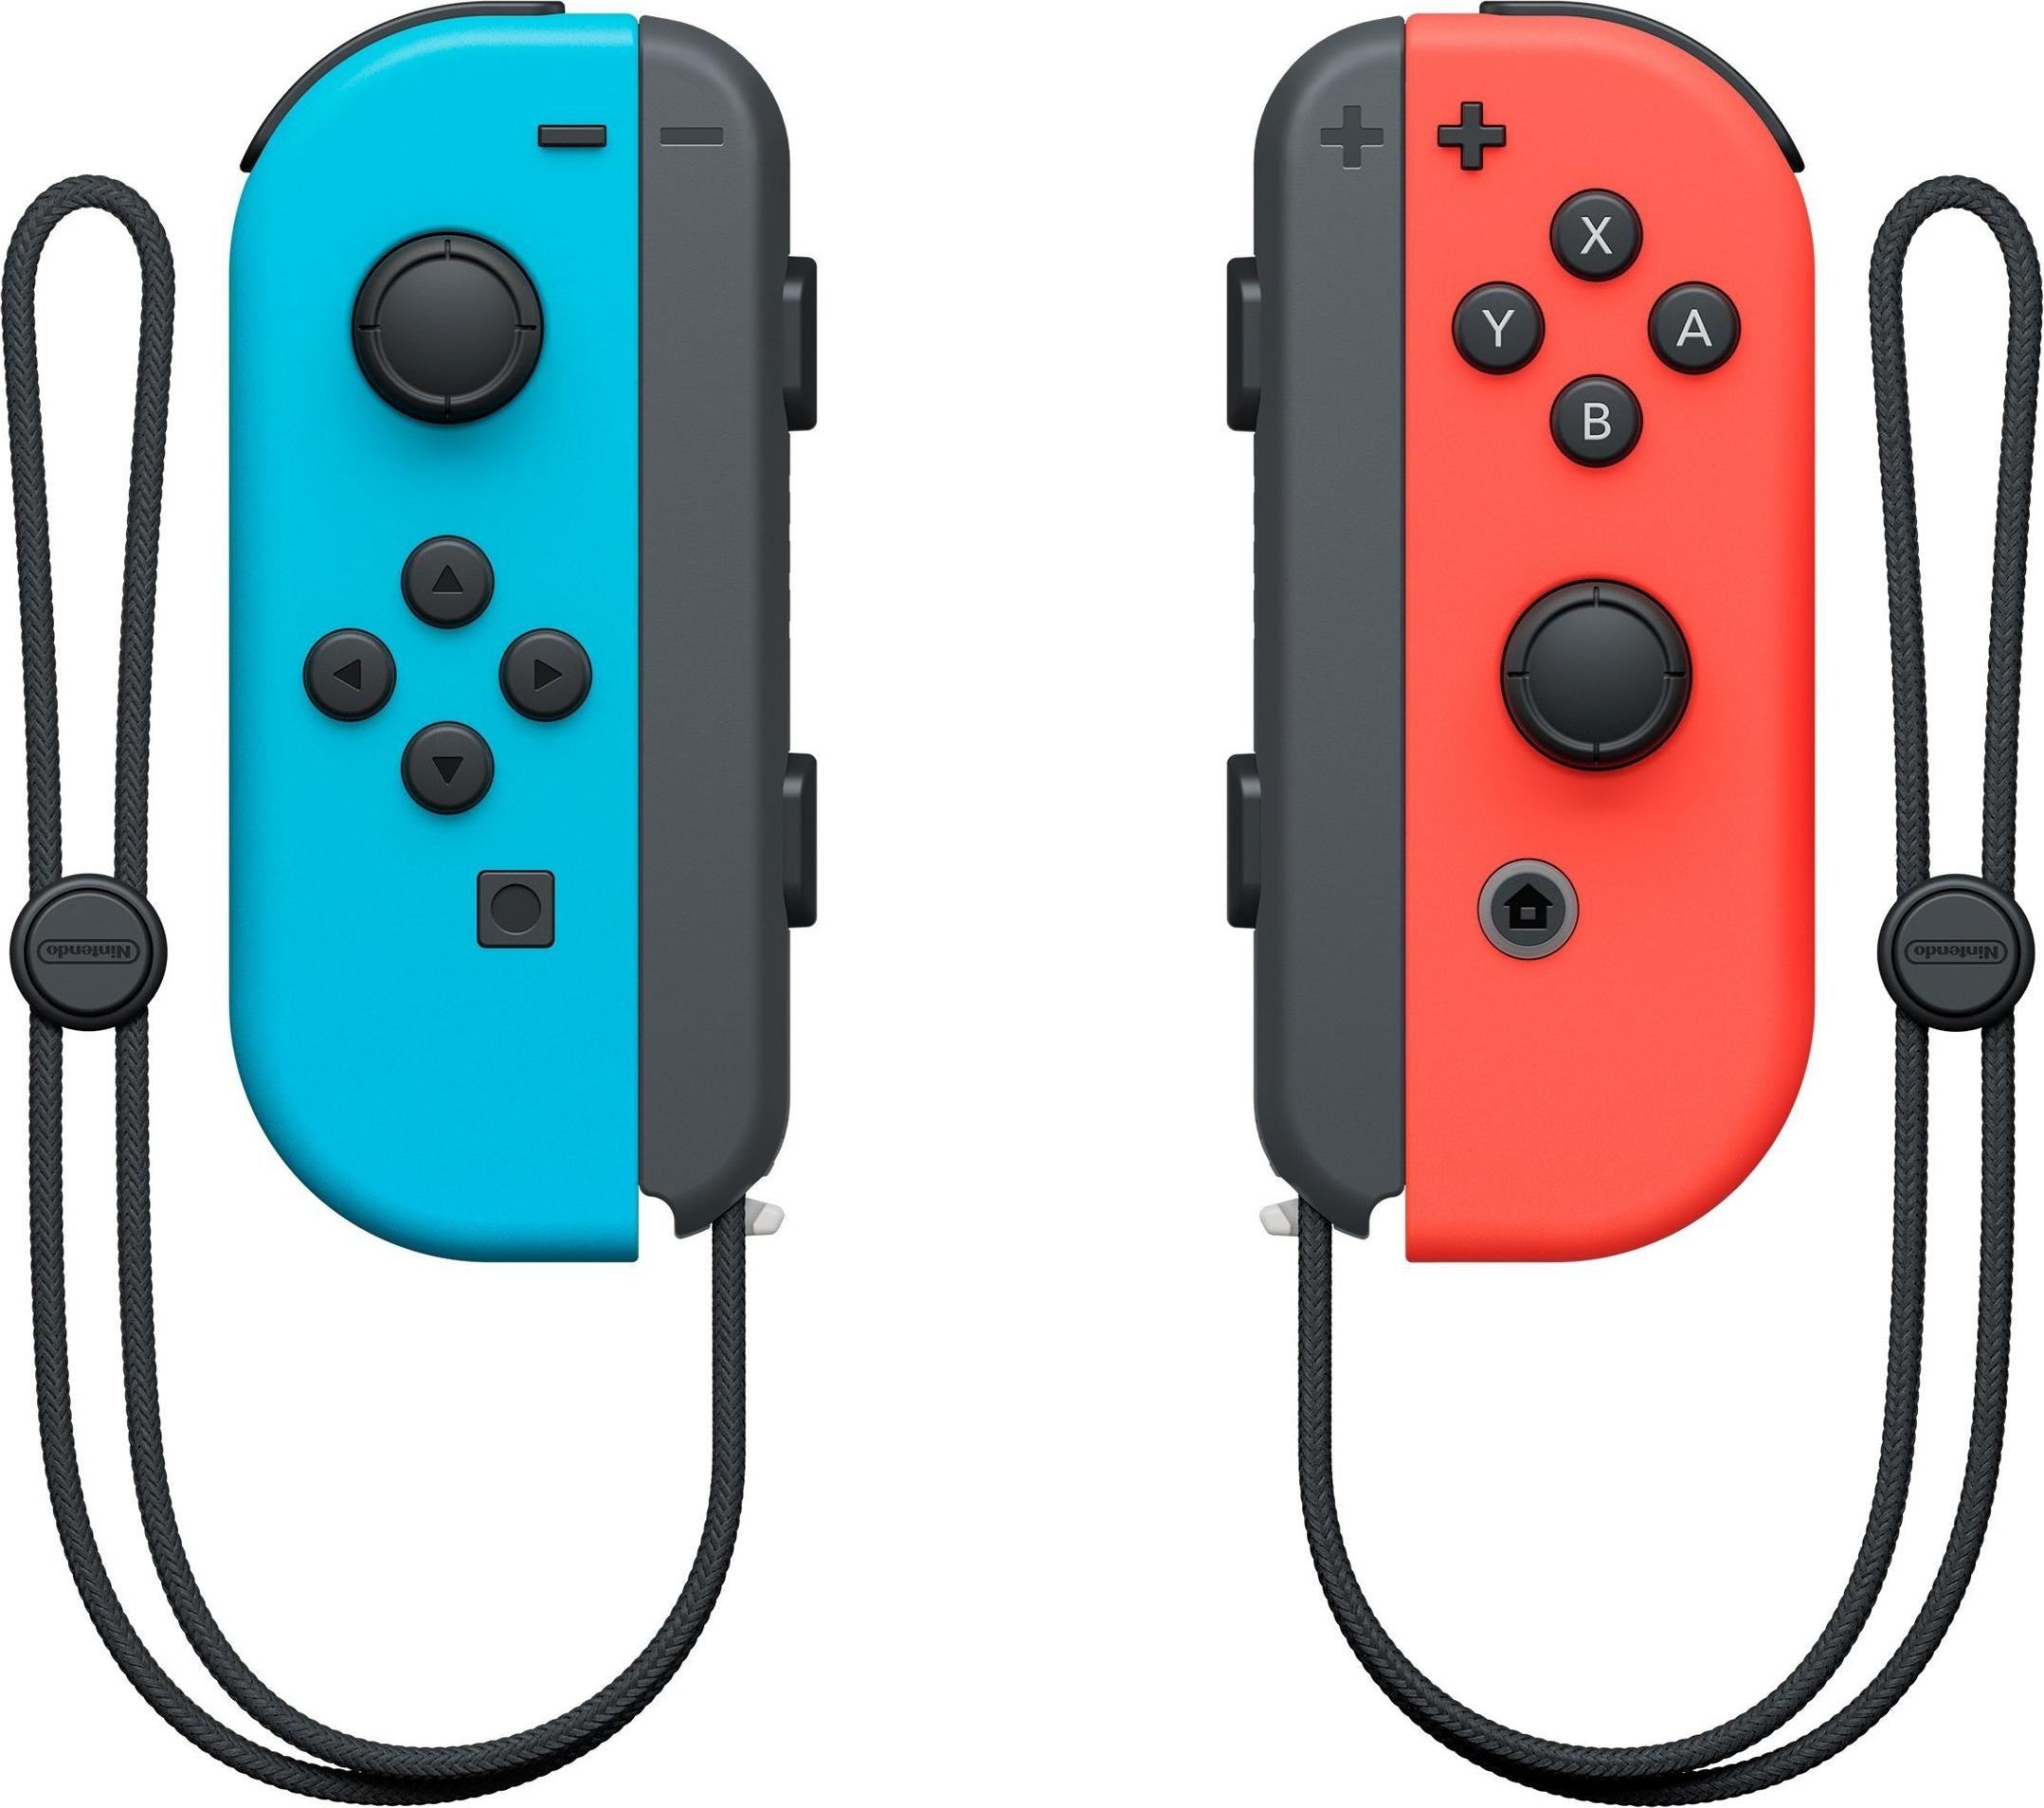 Nintendo Joy-Con Set Blue/Red (Switch), Gaming Controller, Blau, Rot